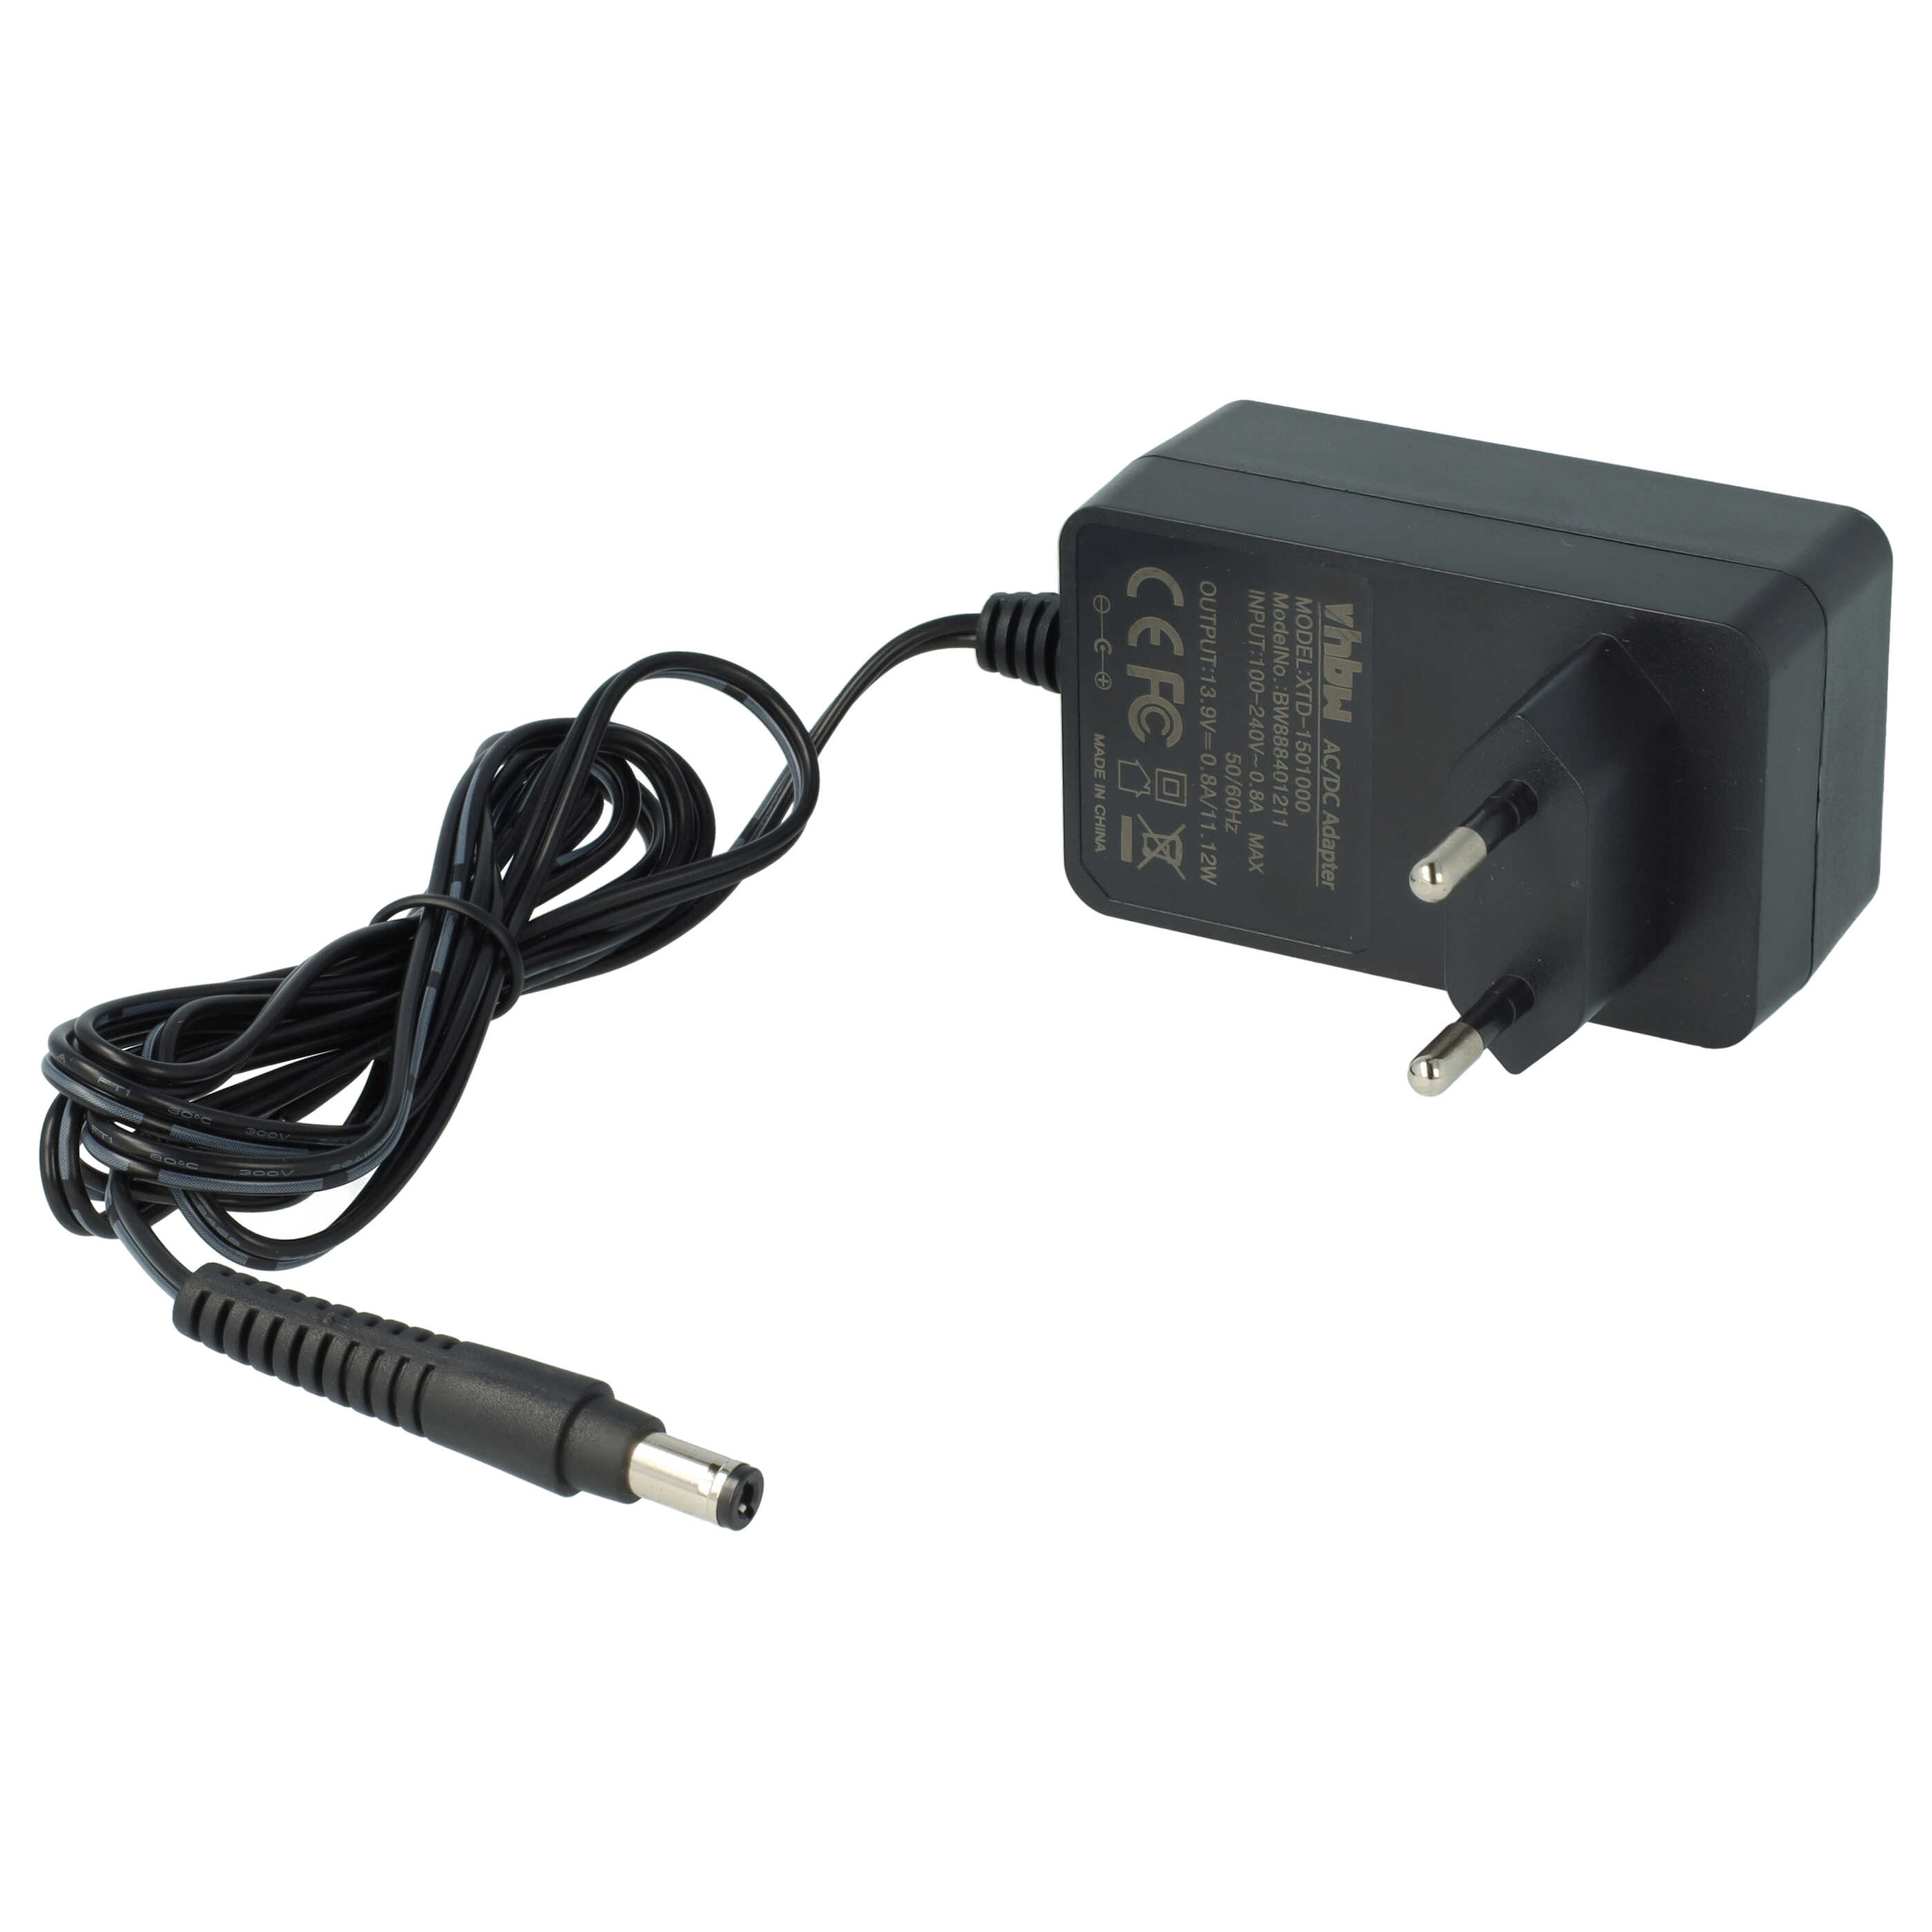 Mains Power Adapter replaces Rowenta 180018619, CS-00118619 for Rowenta Epilator - 140 cm